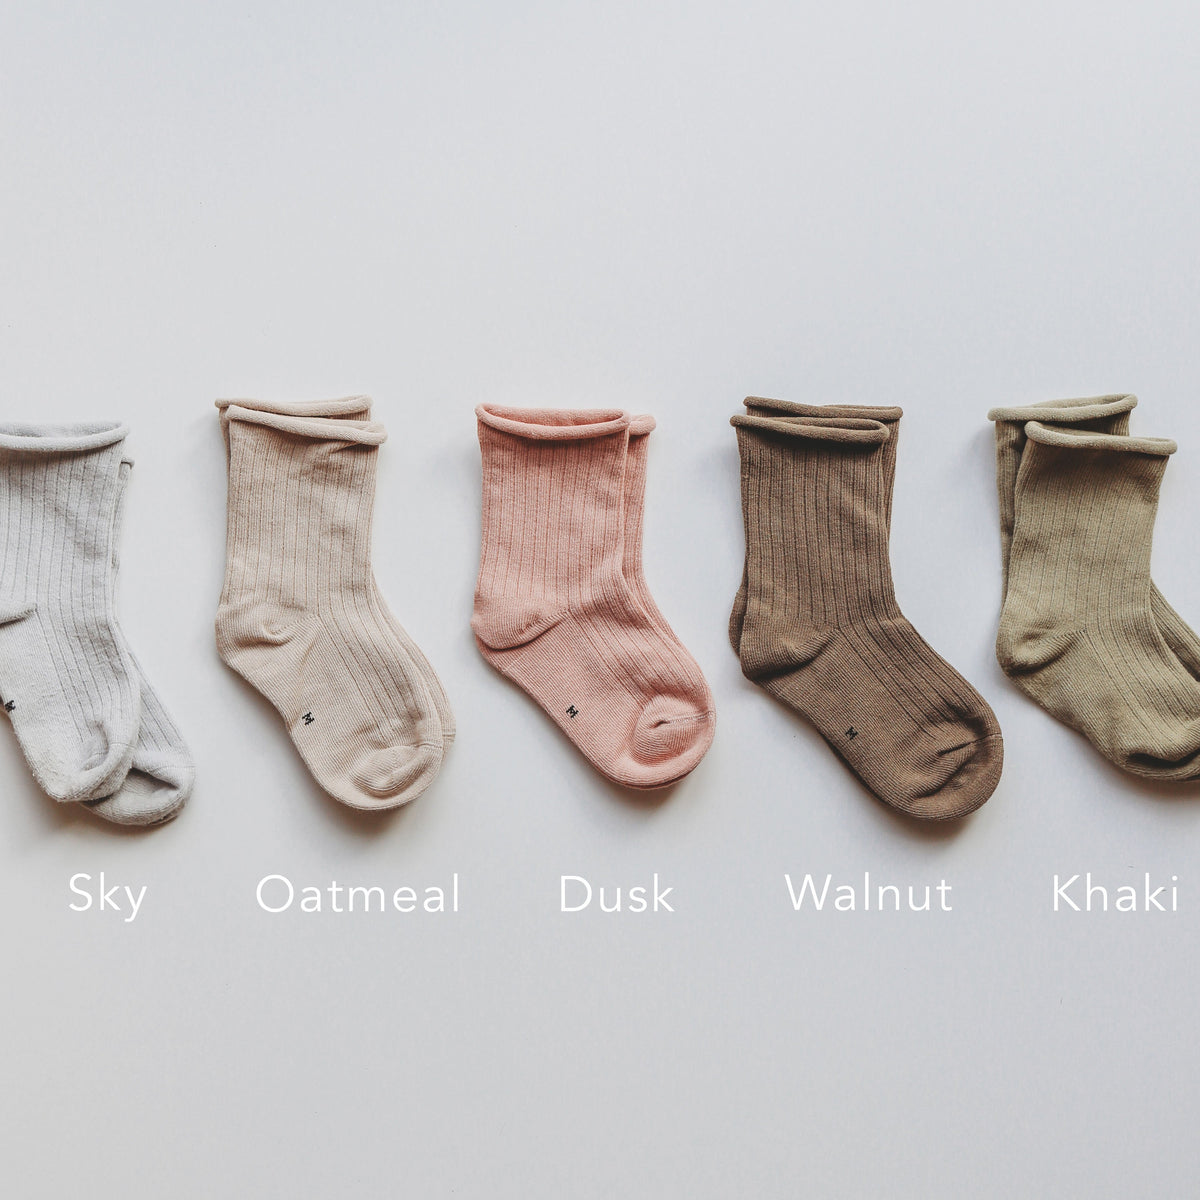 Cotton Socks - Colour ways include Sky, Oatmeal, Dusk, Walnut, Khaki